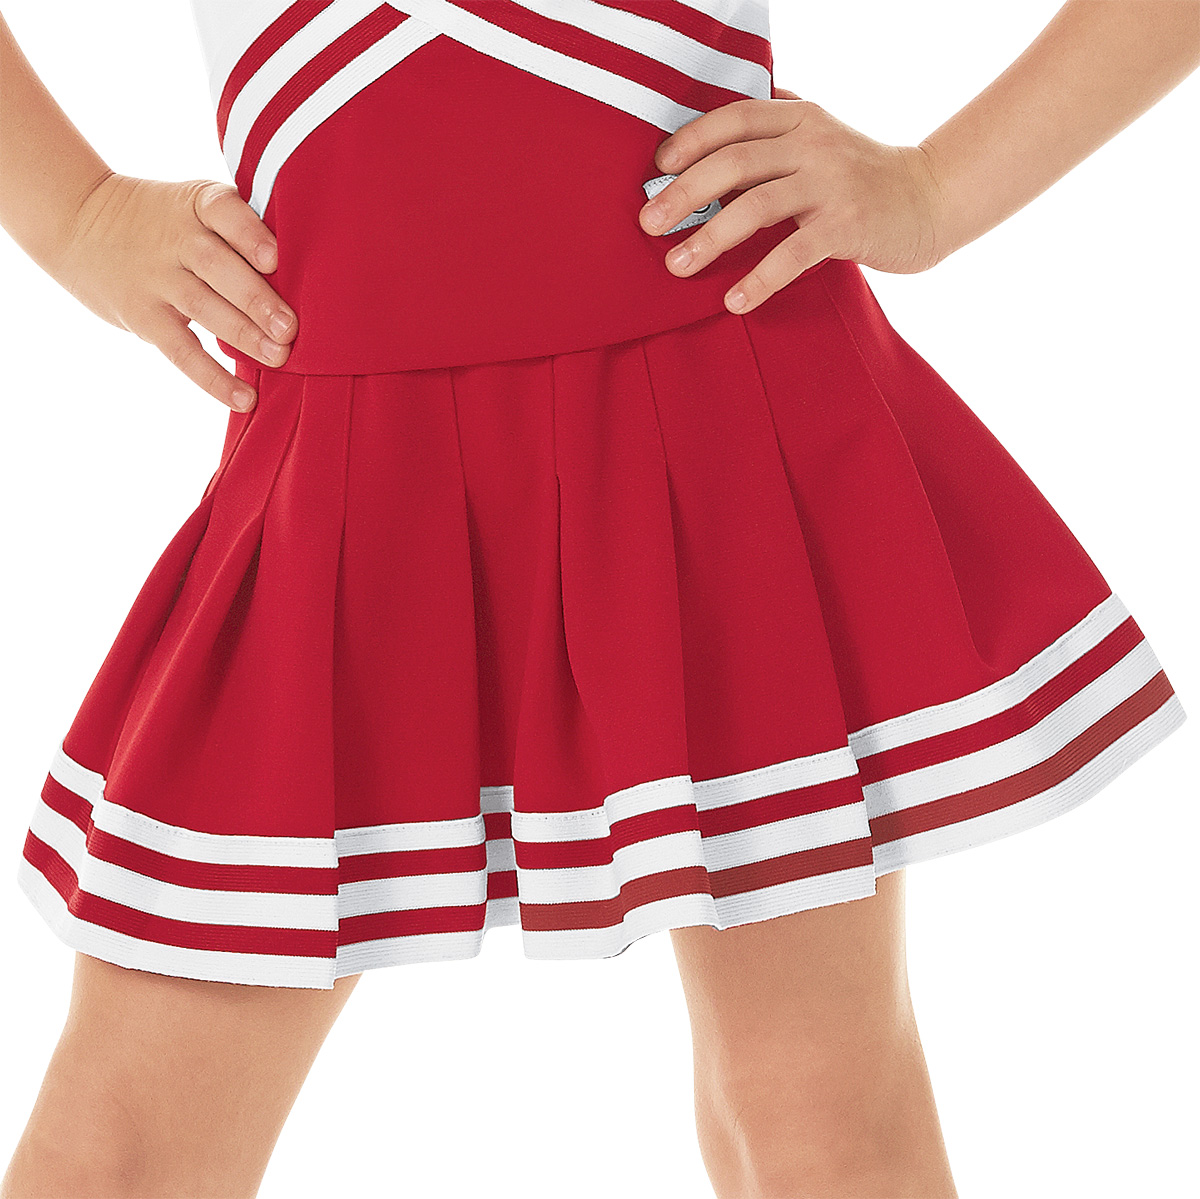 Danzcue Child Cheerleading A-Line Pleat Skirt 